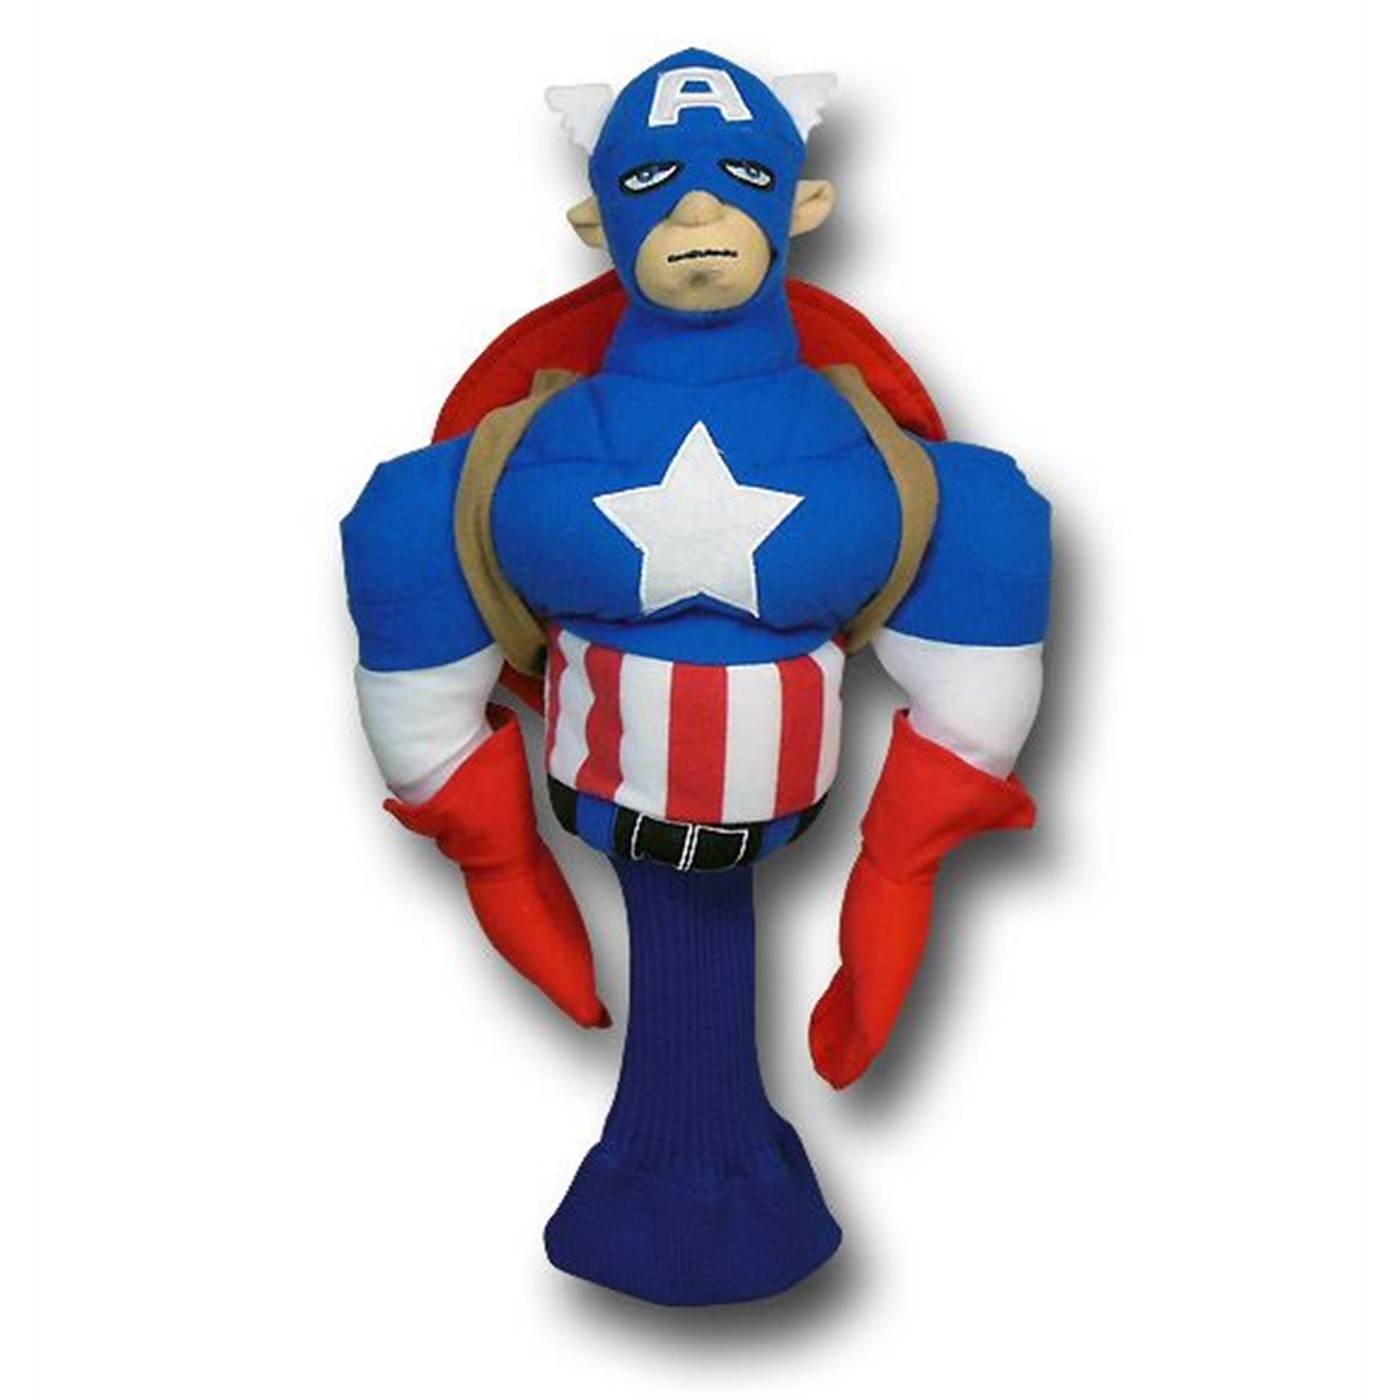 Captain America Figure Golf Club Cover